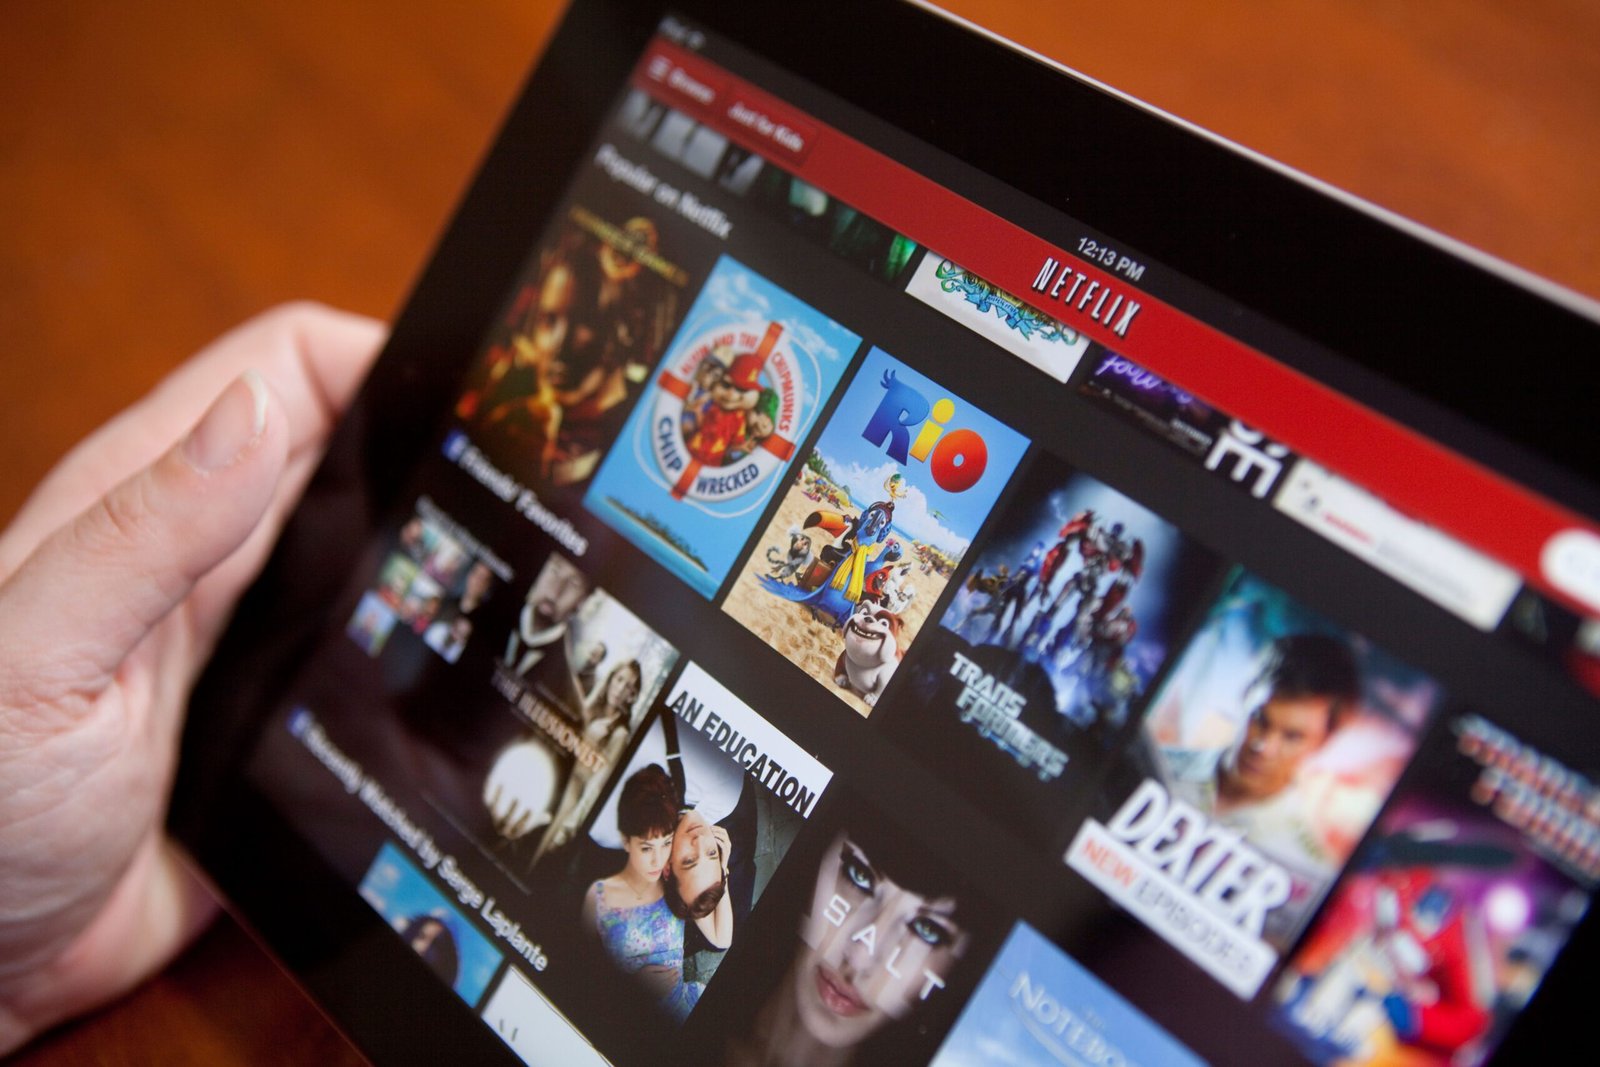 Streamers Ditch Netflix for Dark Web After Password Sharing Ban – Source: www.darkreading.com